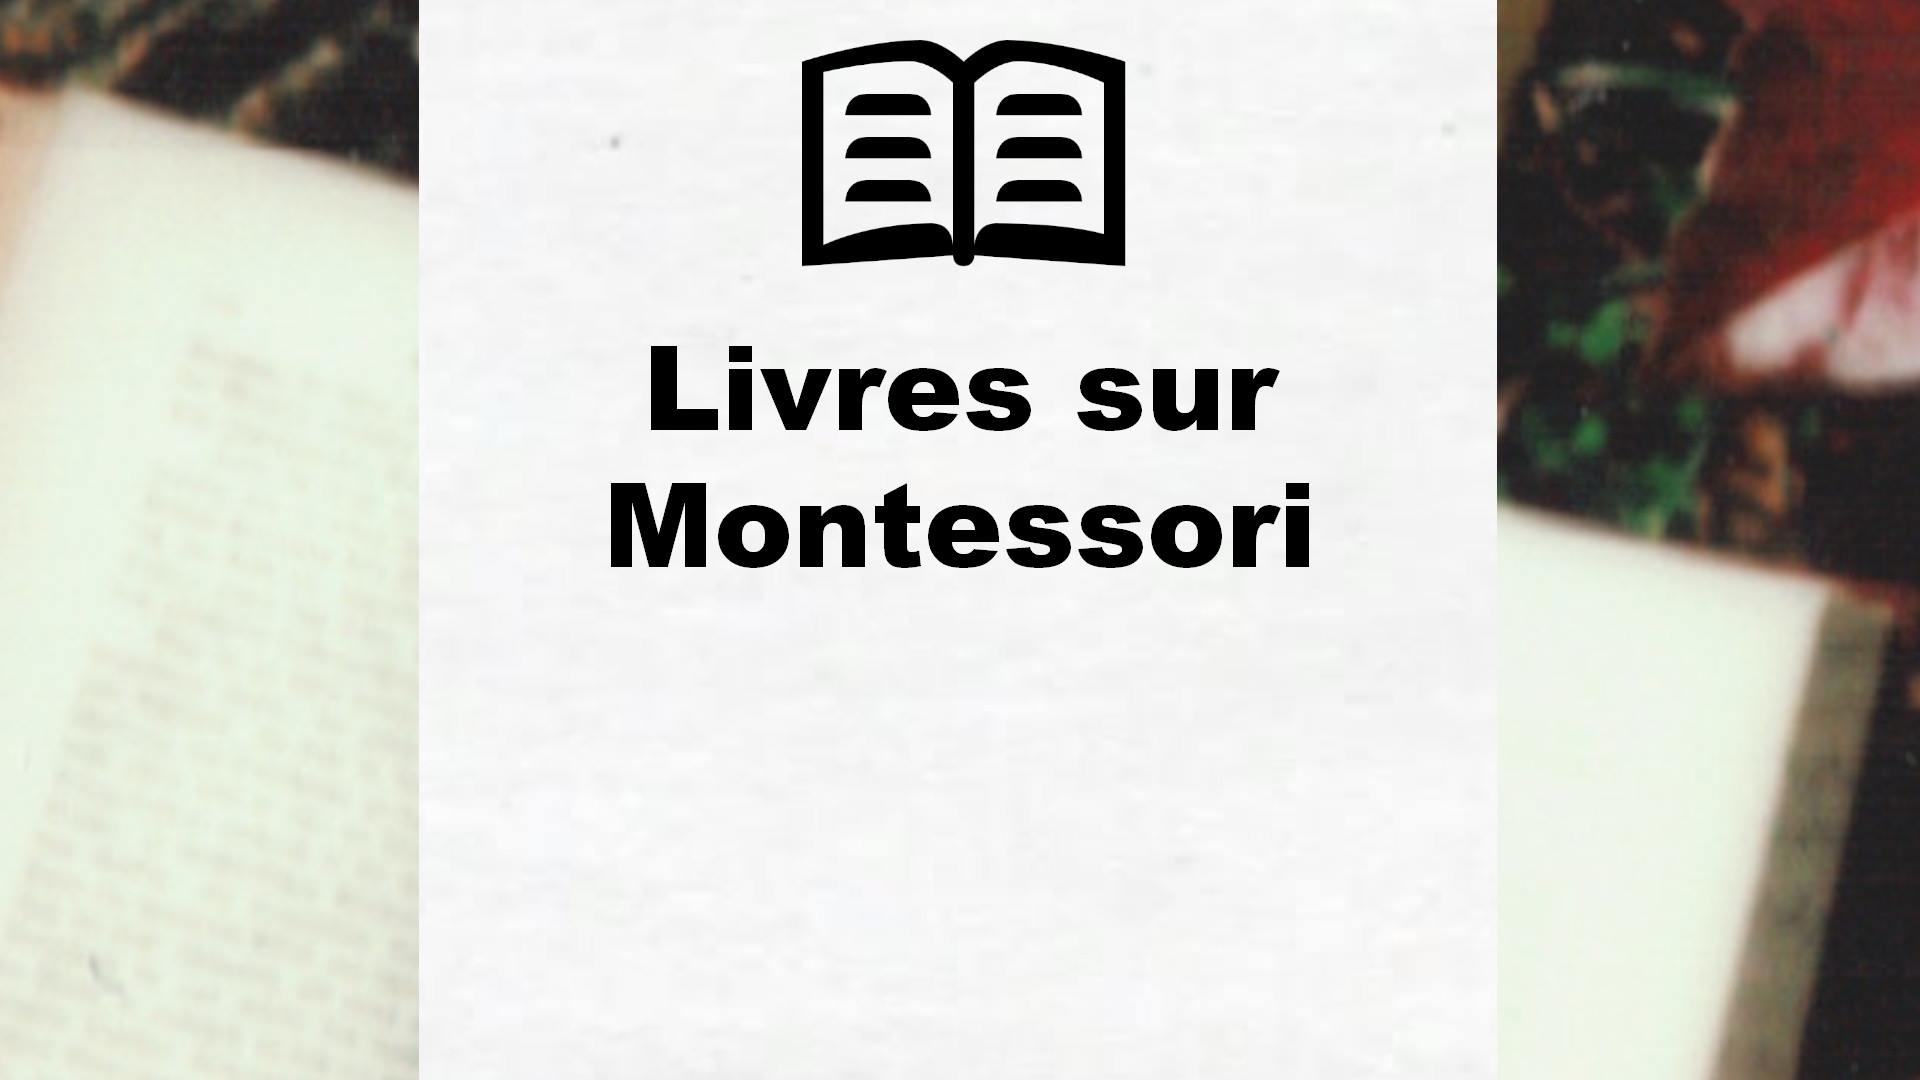 Livres sur Montessori